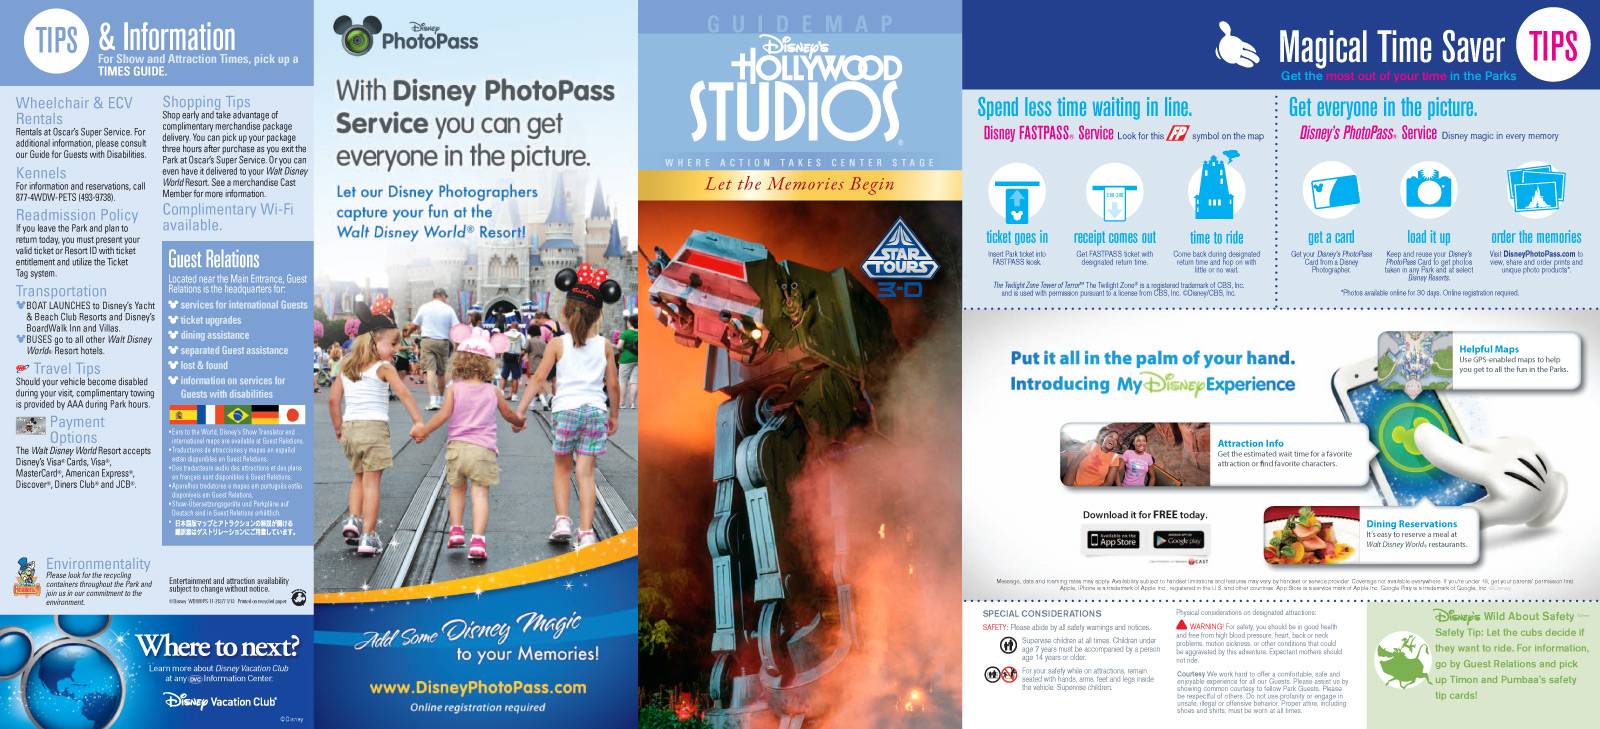 Disney's Hollywood Studios guidemap 2013